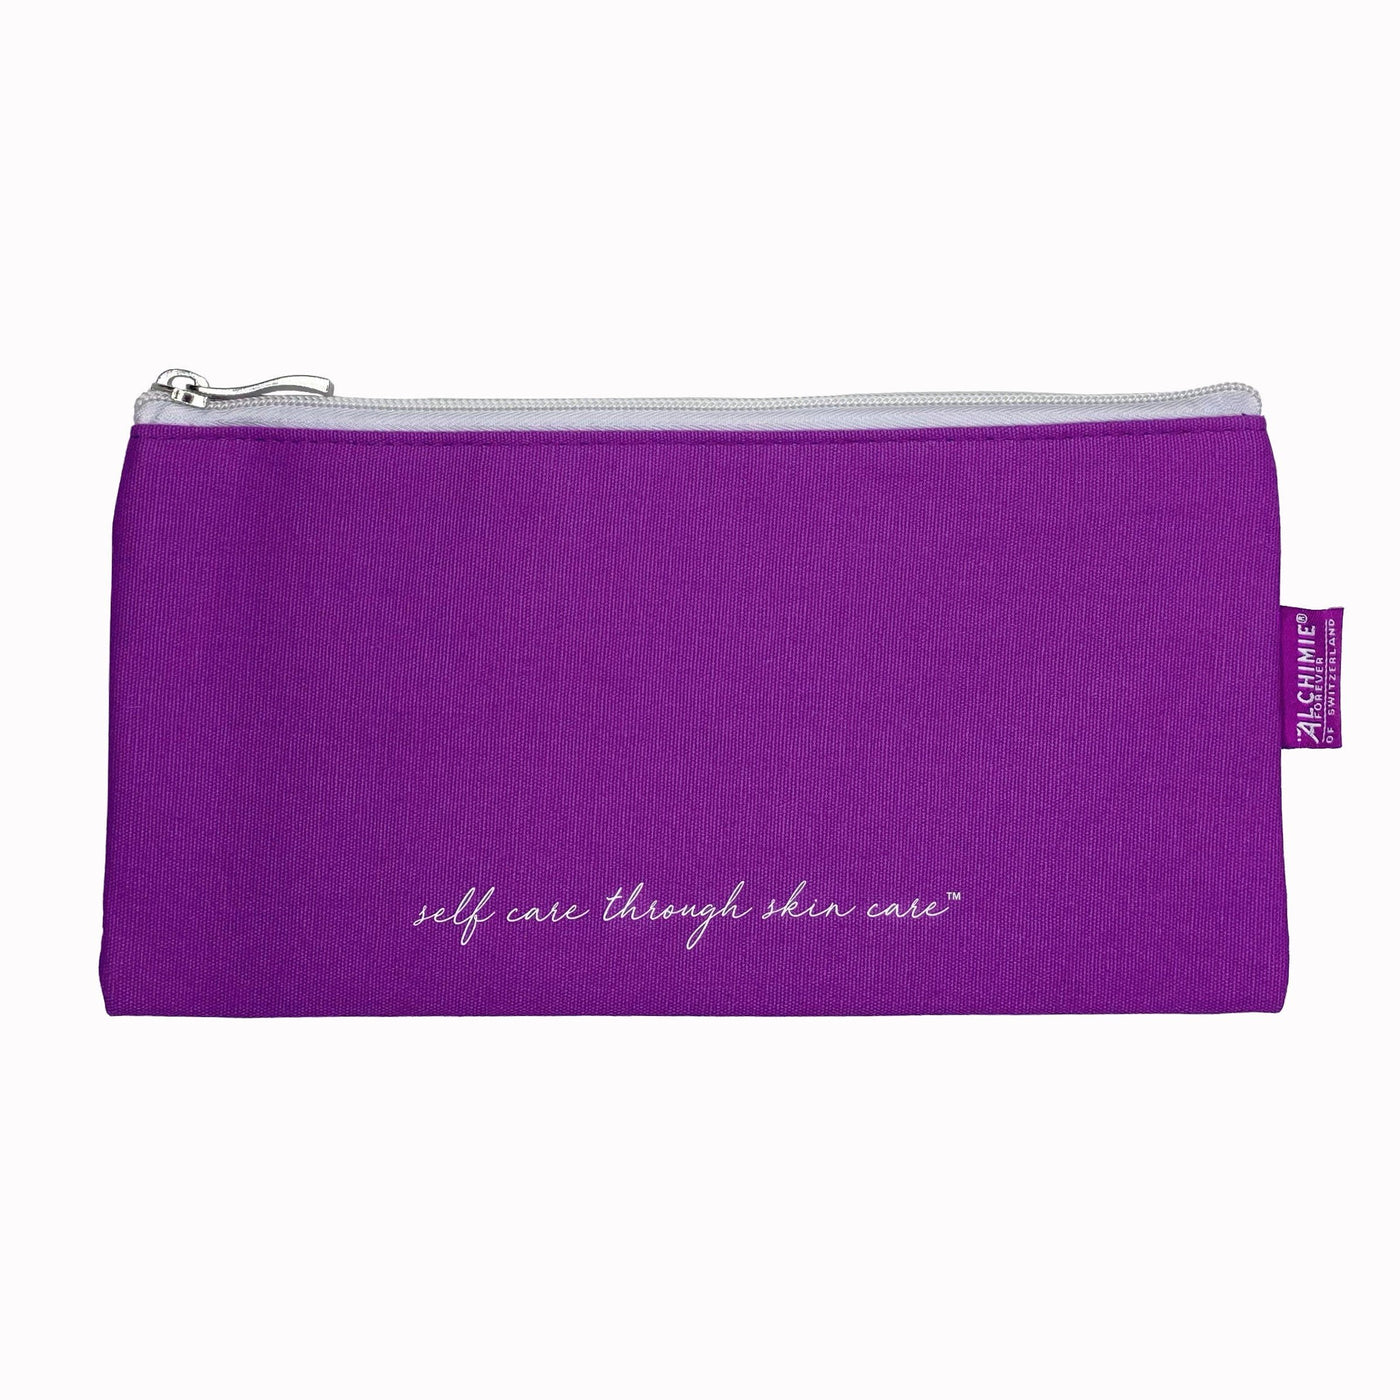 Alchimie Forever Self Care Through Skin Care purple cosmetics bag.  